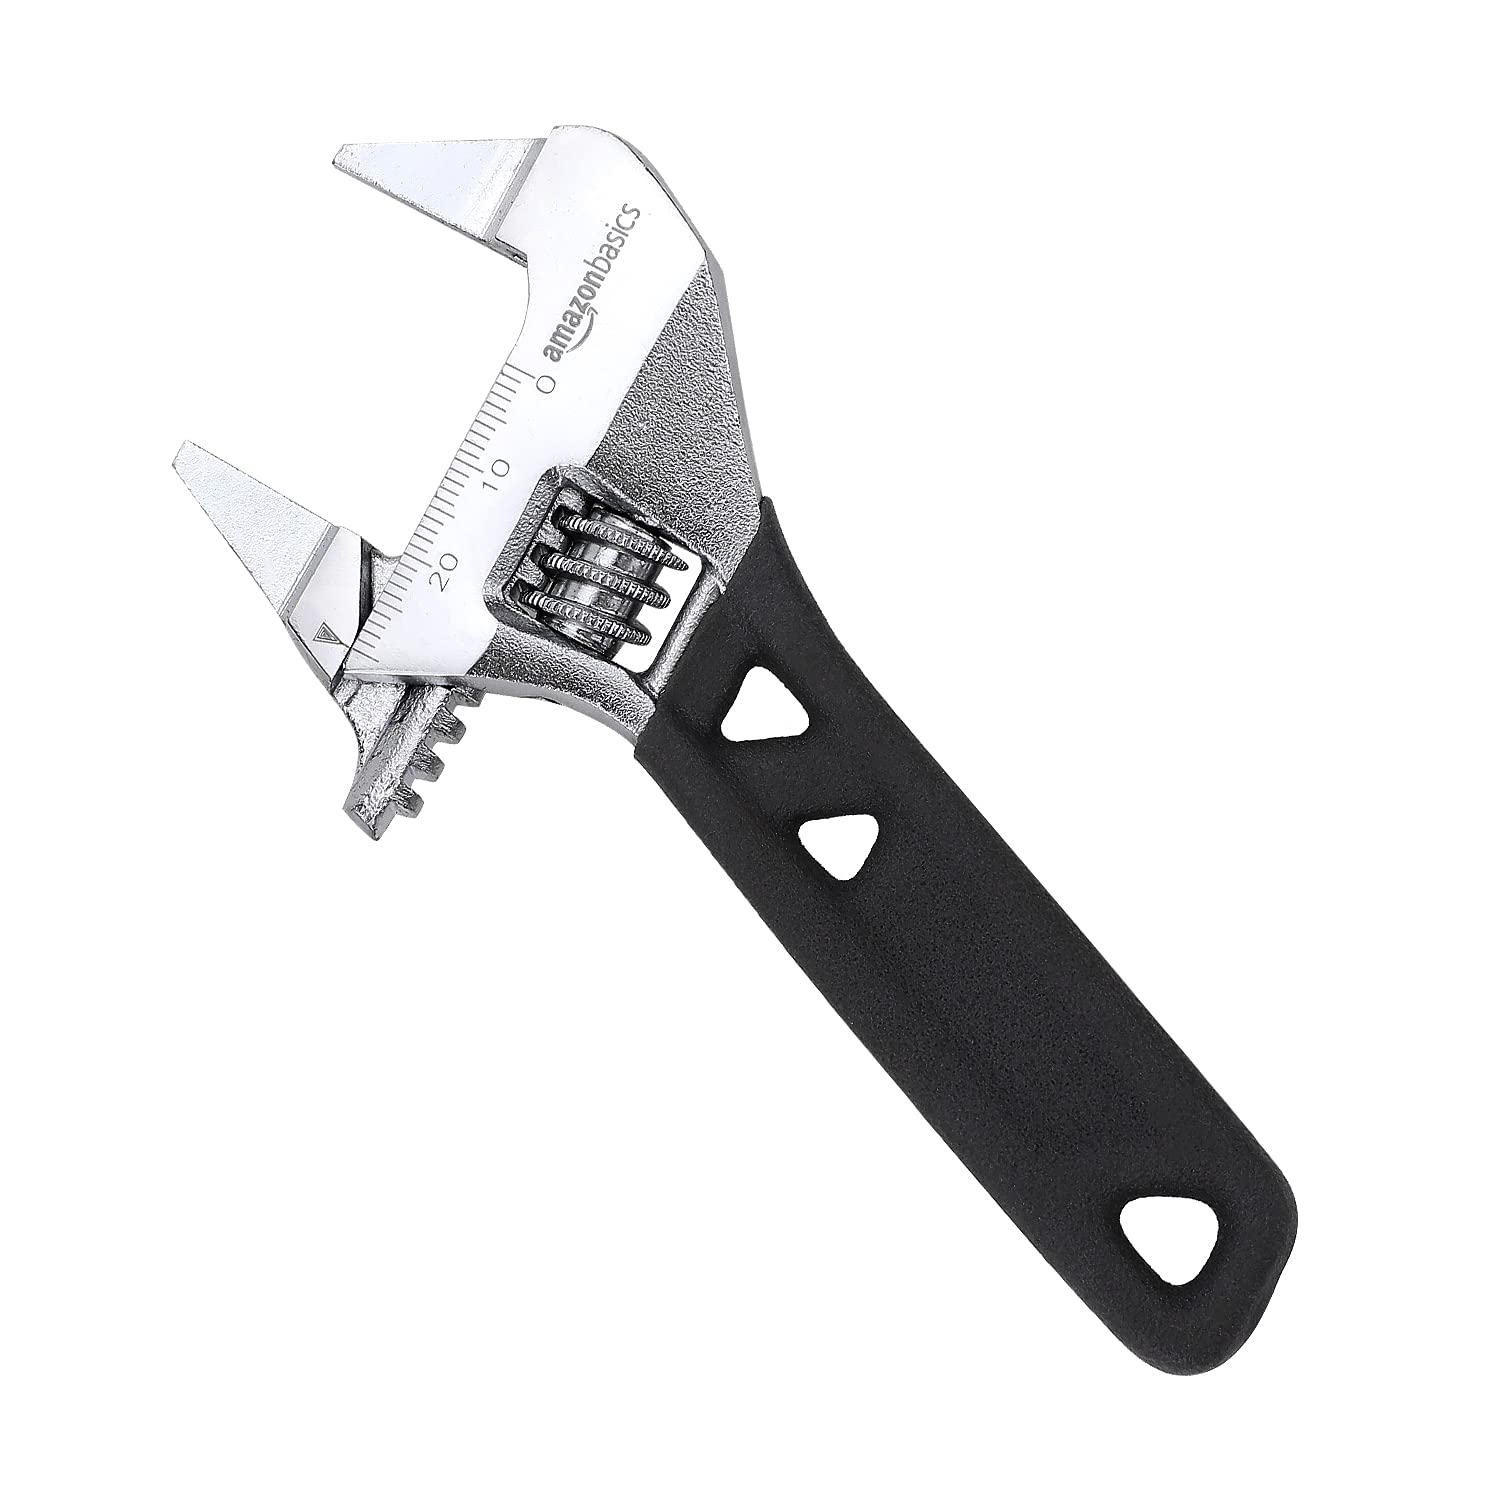 Amazon Basics 5.5-Inch (200mm) Slim Jaw Adjustable Wrench with Inch/Metric Scale - - Amazon.com $8.50